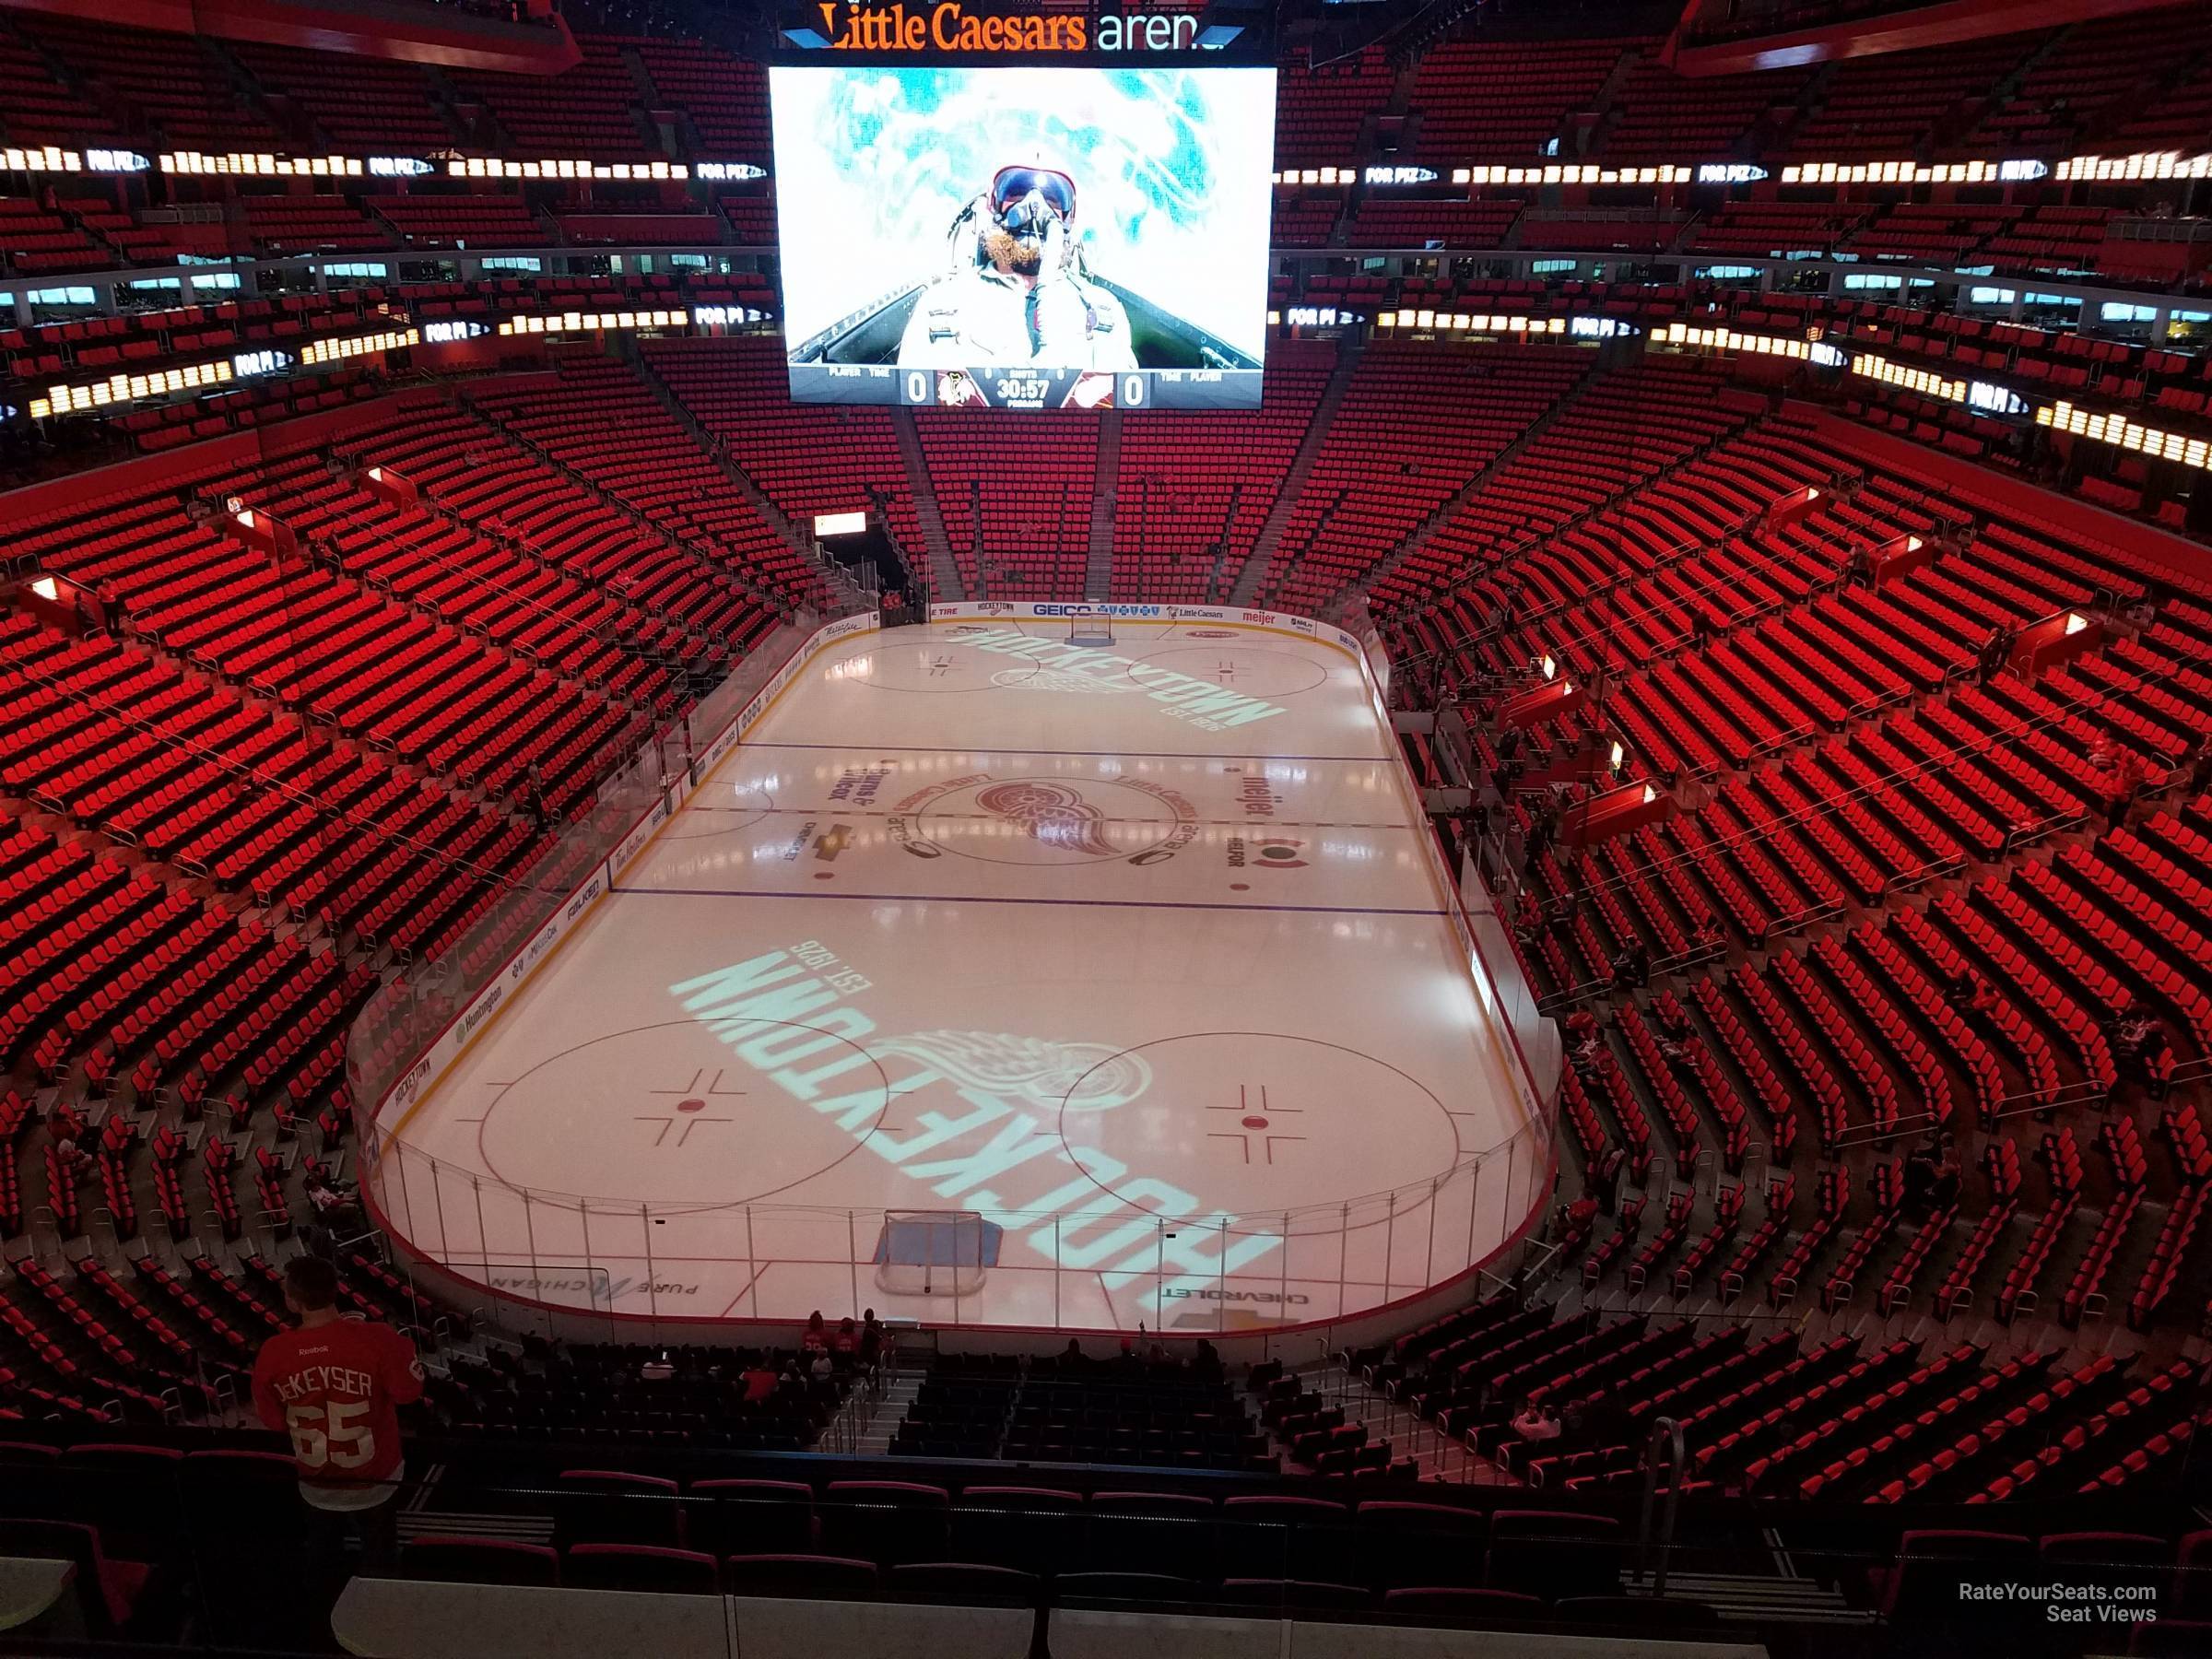 mezzanine 2, row 4 seat view  for hockey - little caesars arena